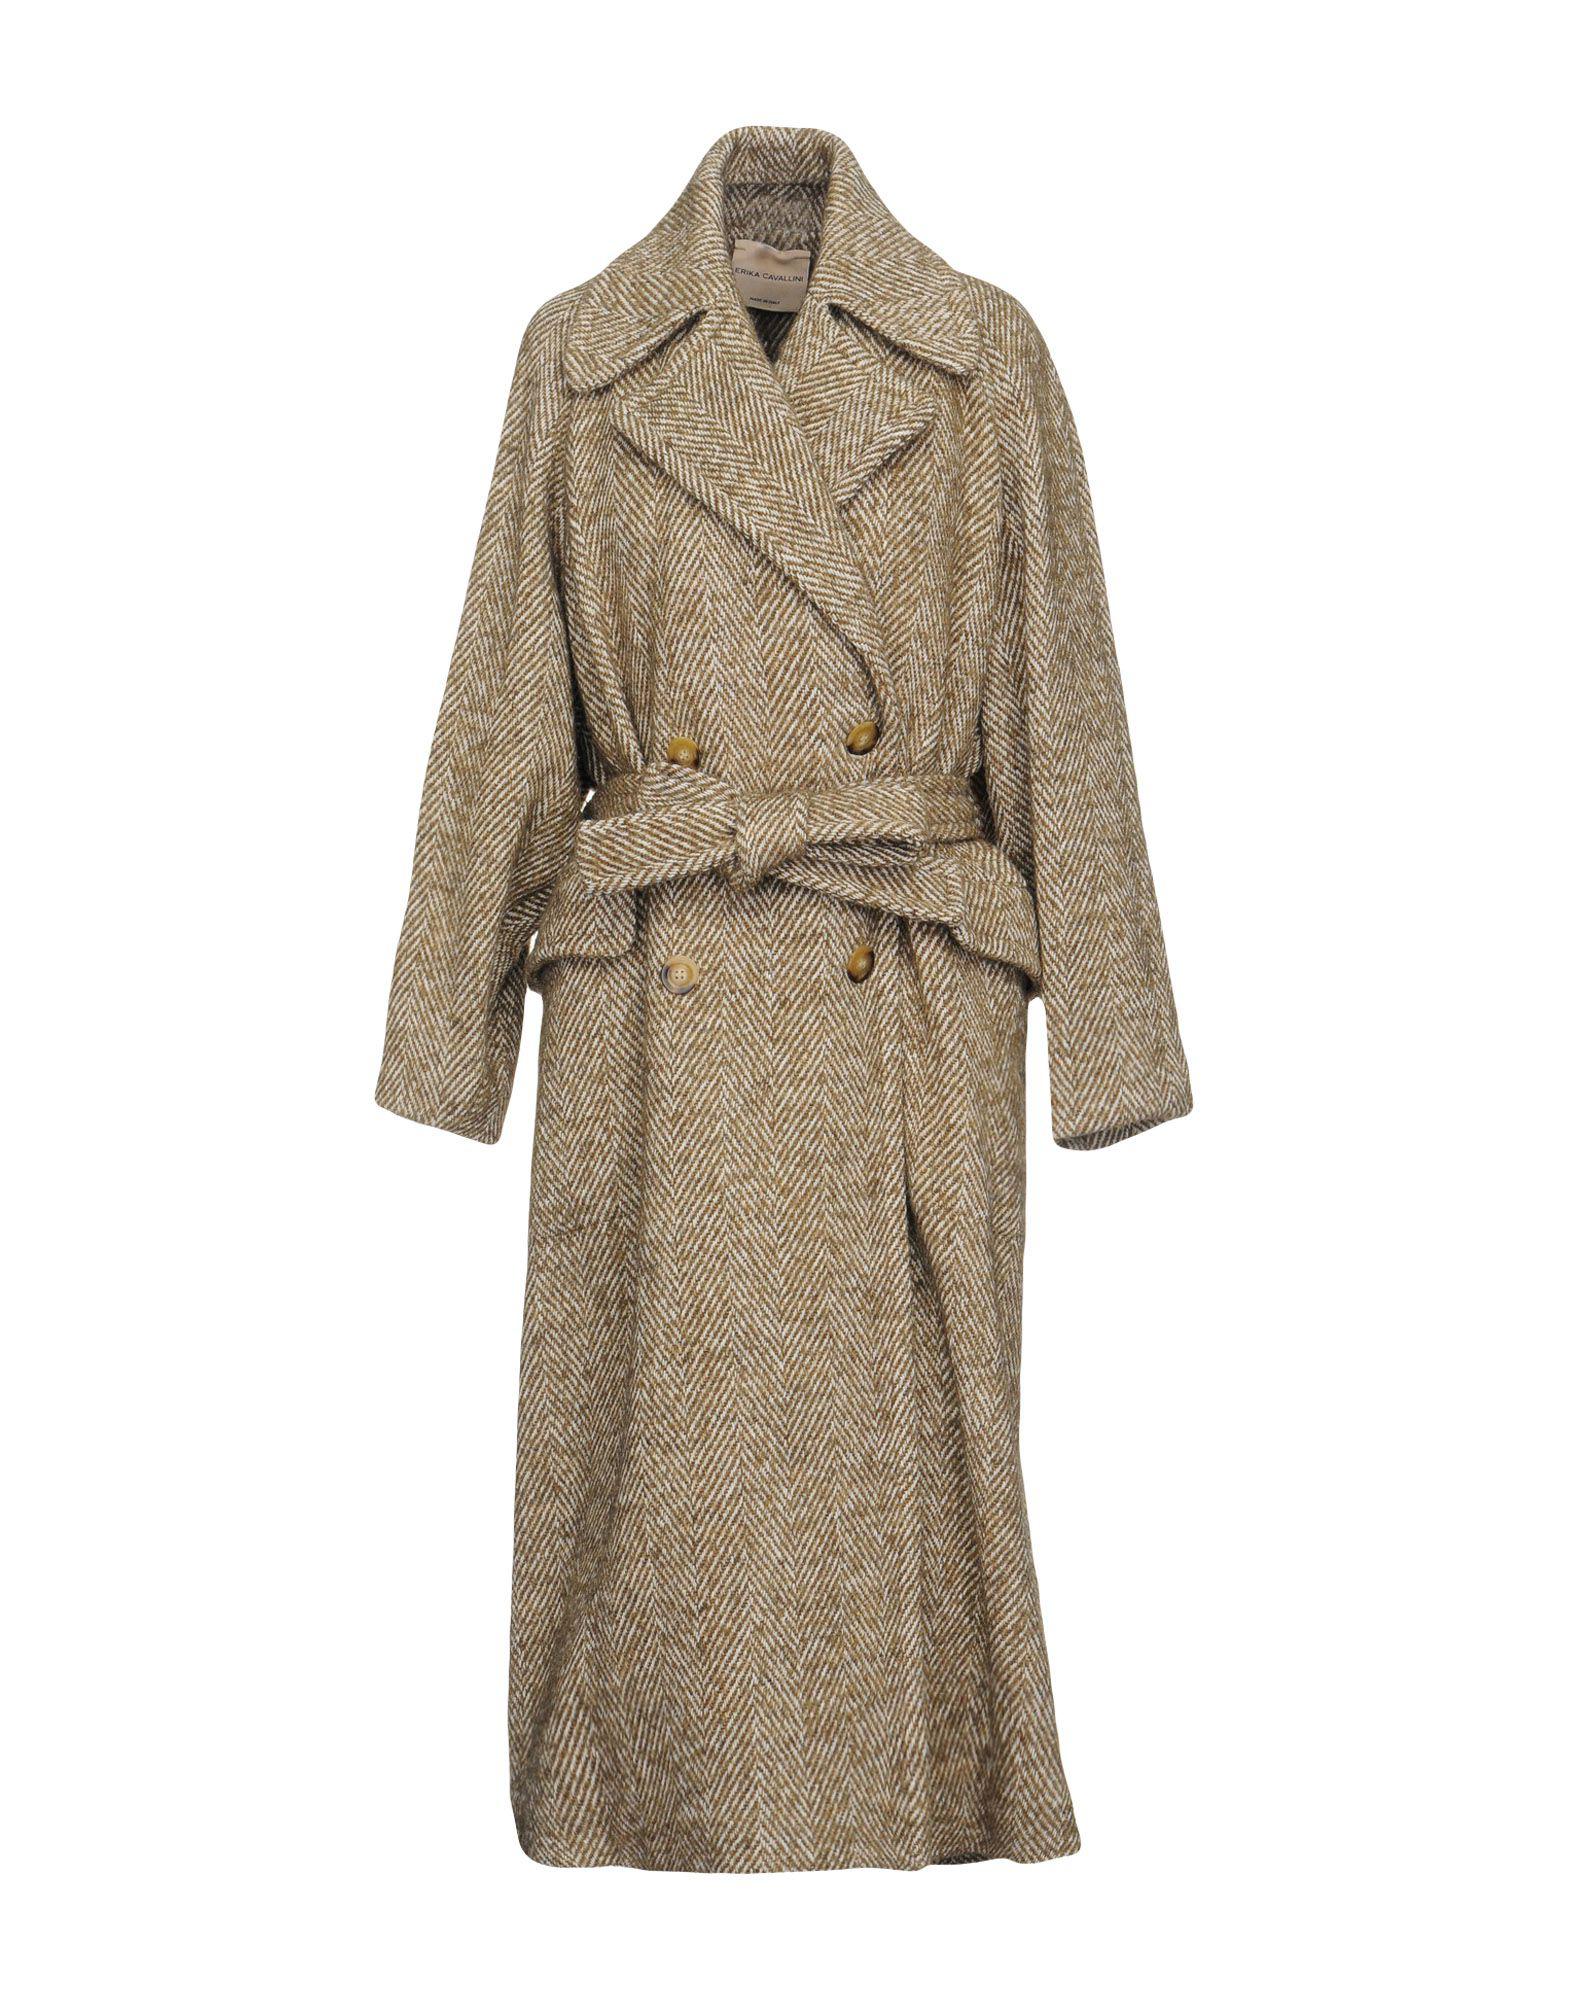 Erika Cavallini Semi Couture Tweed Coat in Beige (Natural) - Lyst